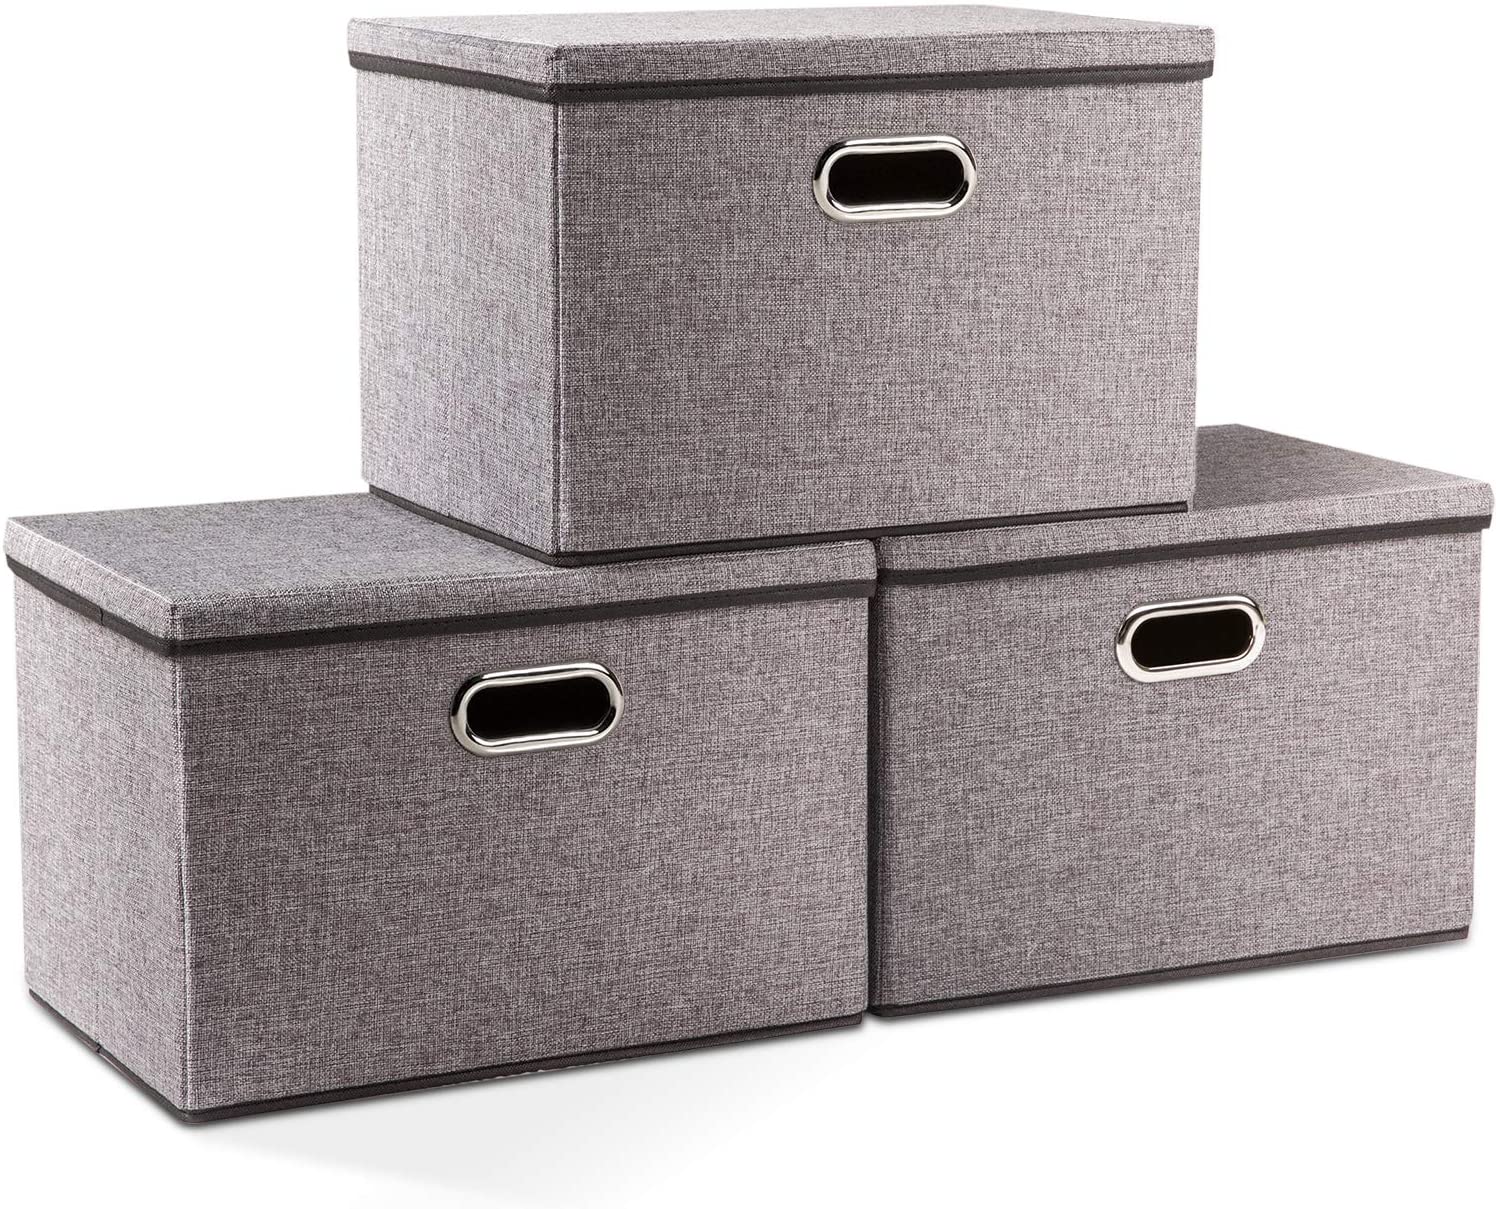 Prandom Space Saving Storage Bins & Boxes, 3-Pack